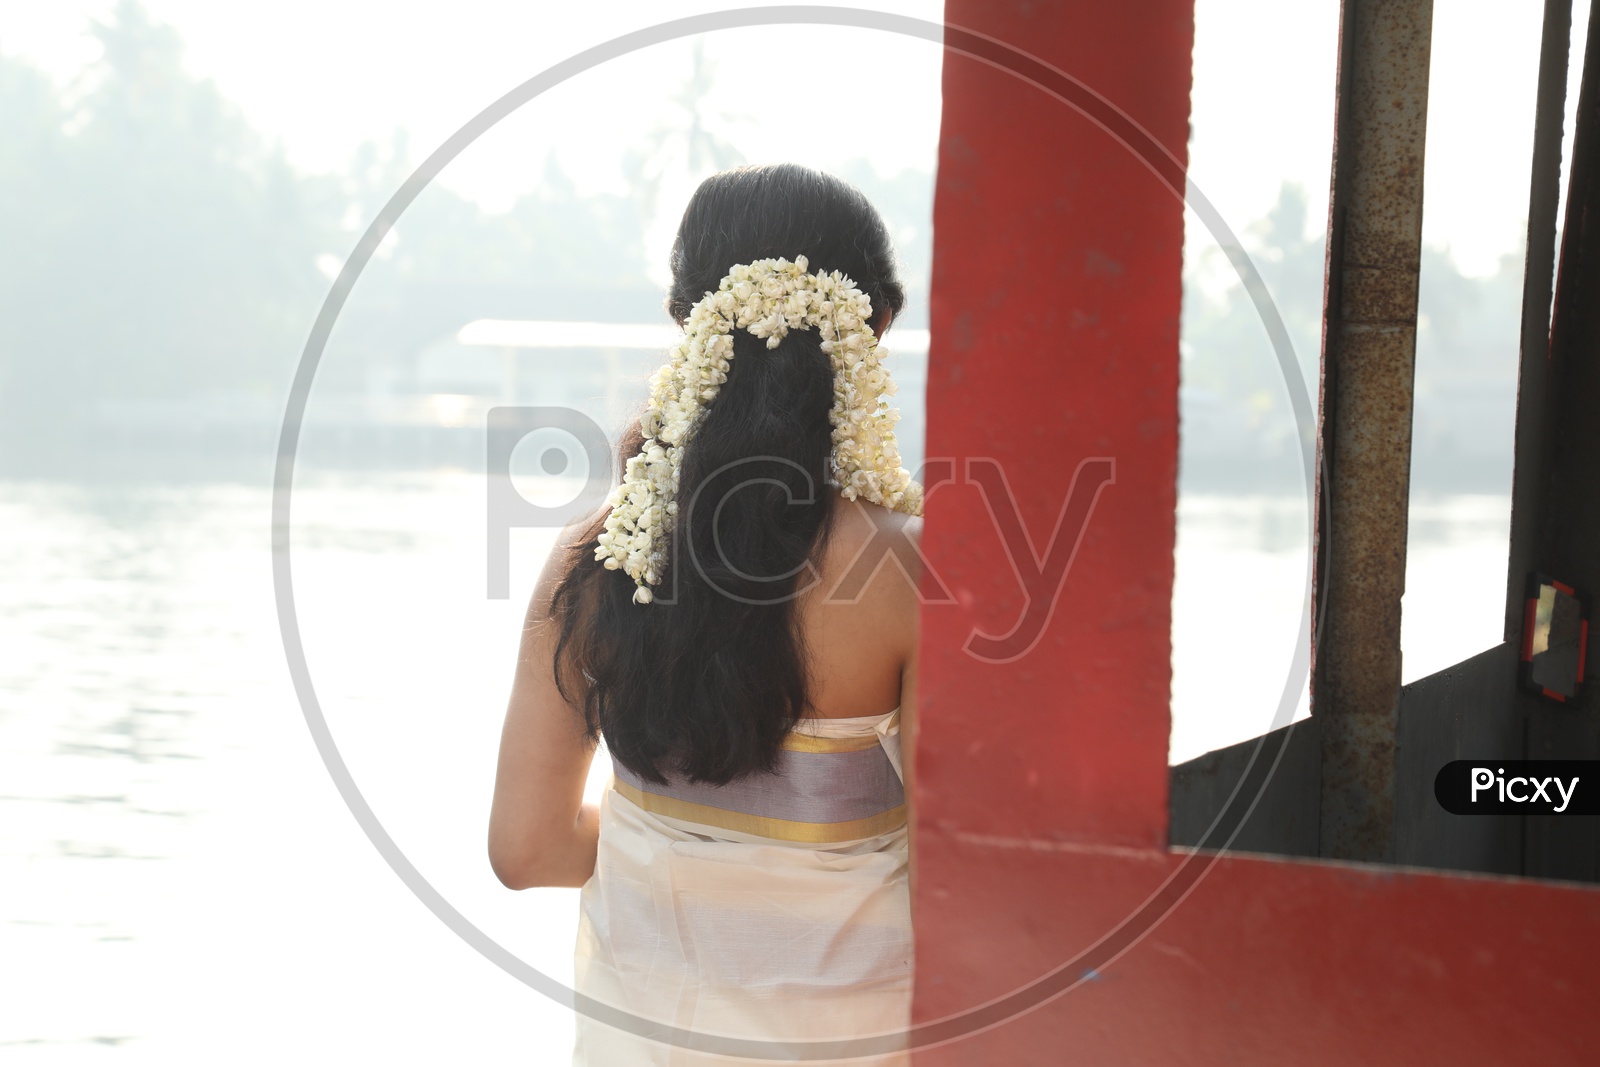 Kerala Girl Hair Style and Flowers In Hair